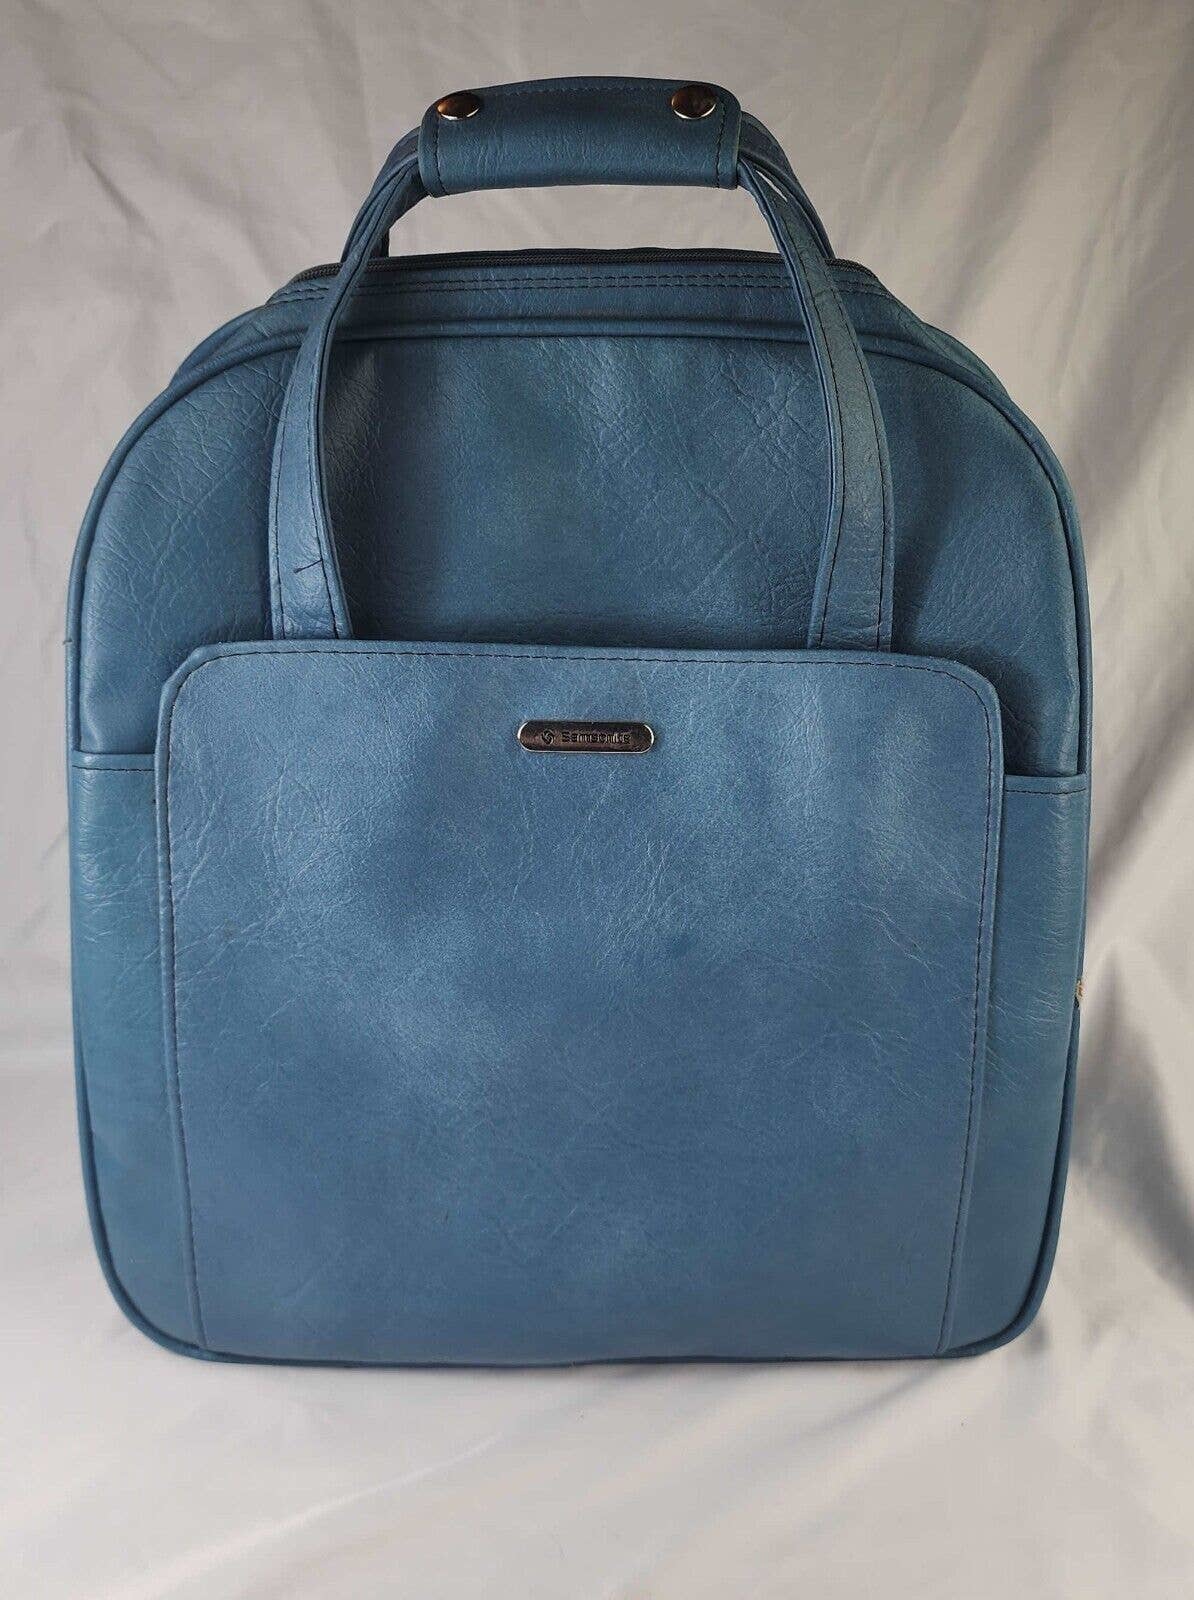 Samsonite Silhouette II Vintage 80s Blue Tall Carry-On Bag Luggage Good Cond - $25.19